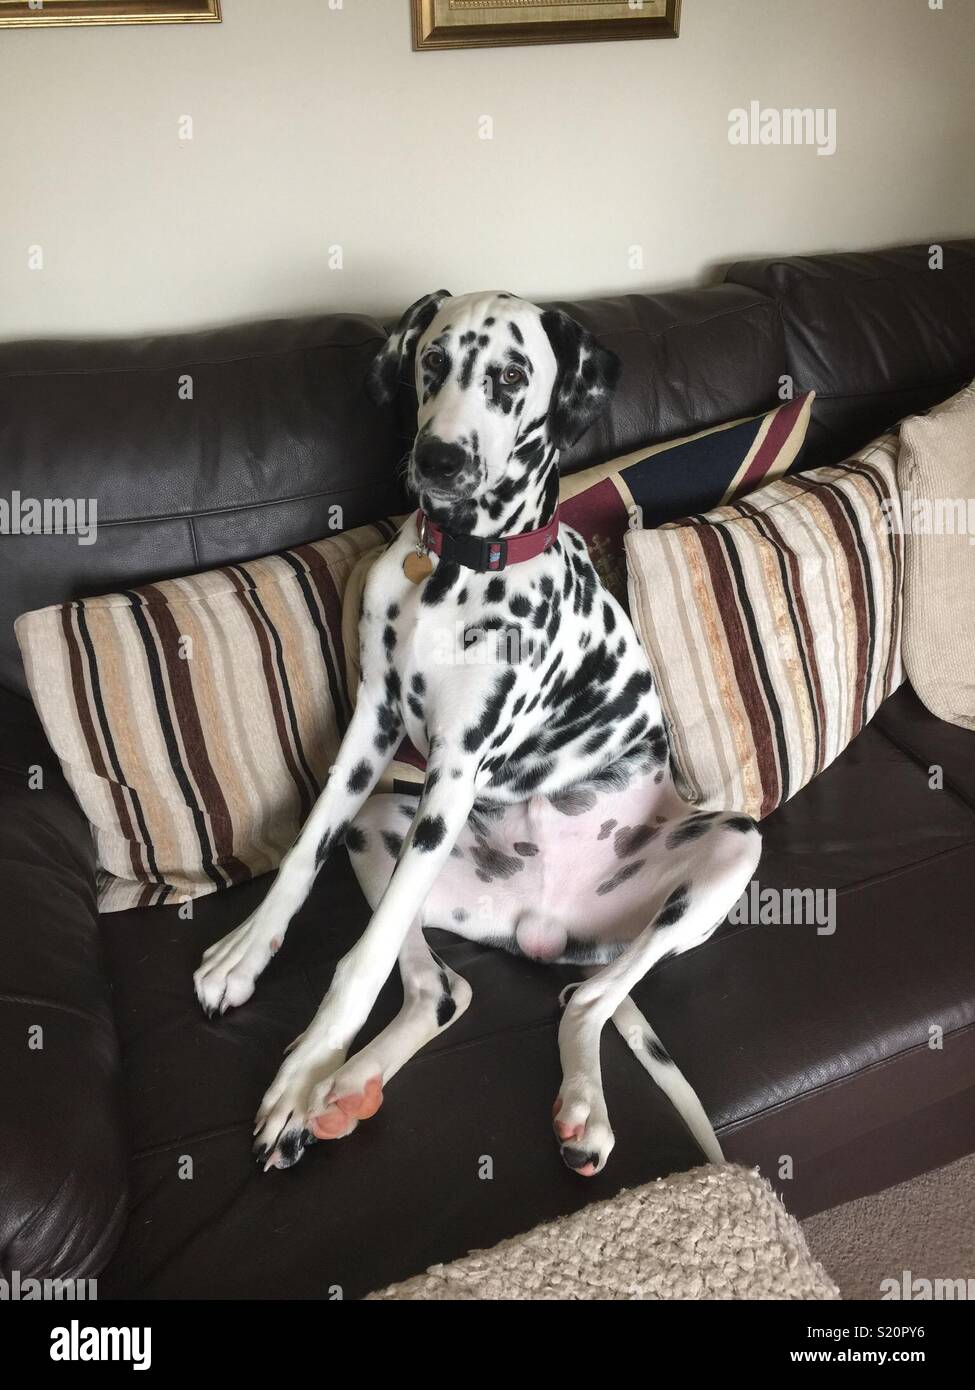 Dalmatian sat on sofa like human Stock Photo